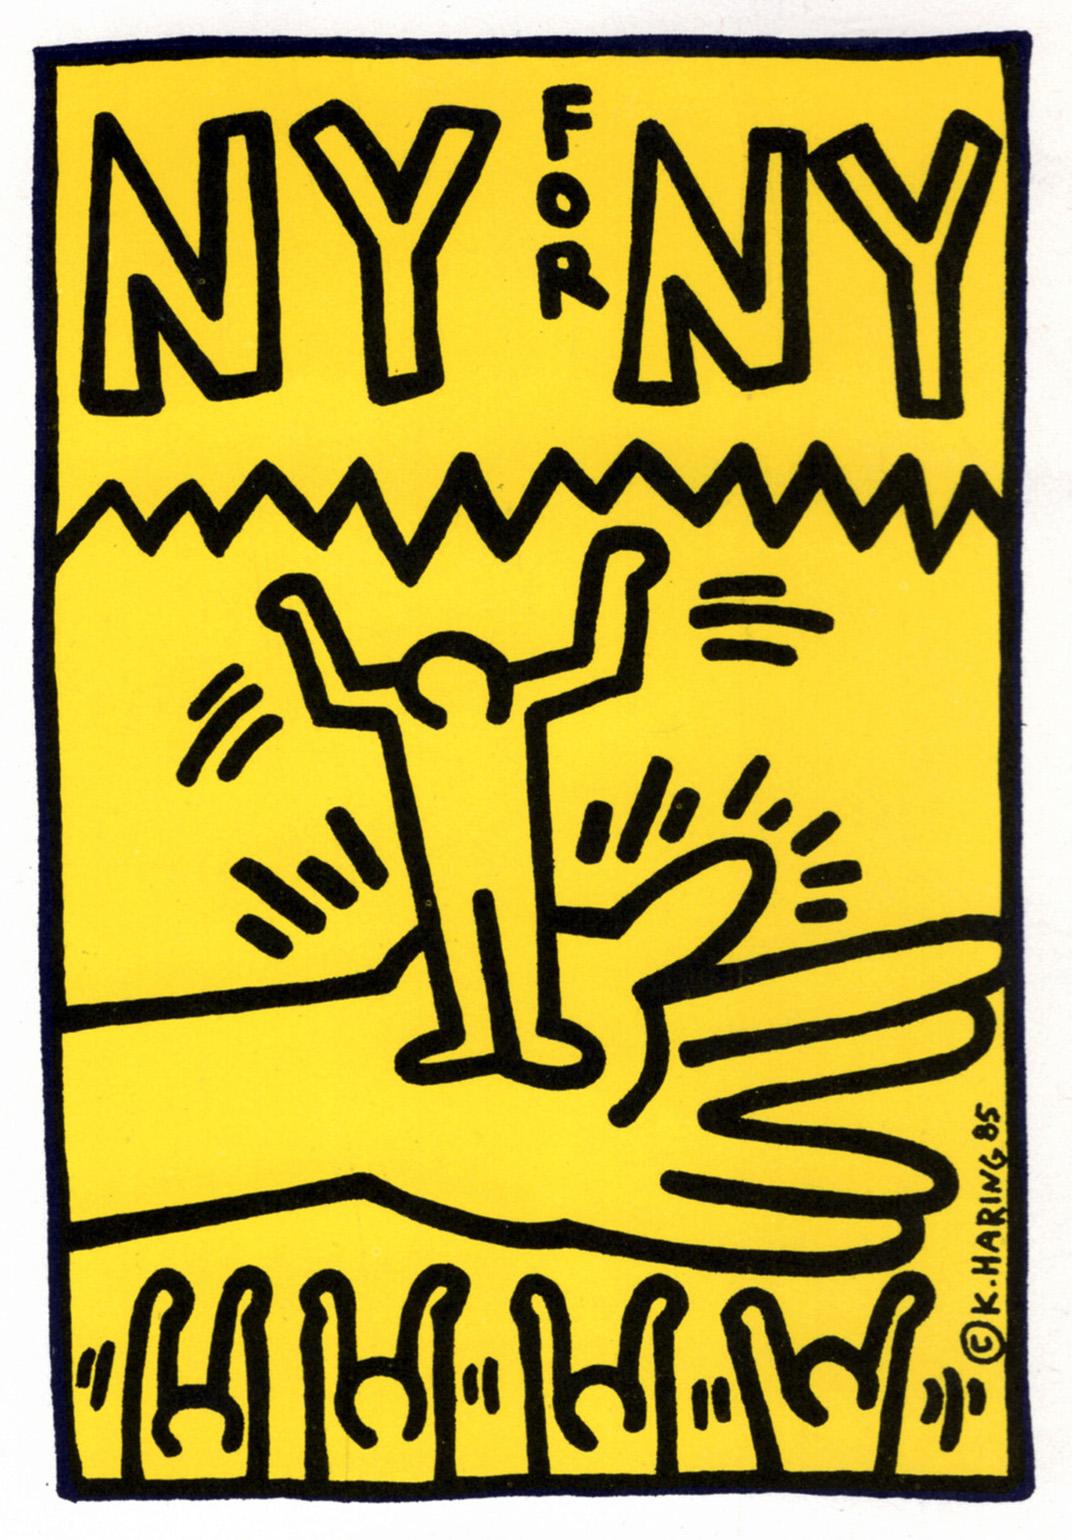 Keith Haring 1985:
Keith Haring illustrierte Ankündigungskarte, NY, 1985: "NY for NY, Help The Homeless" im Roxy, West 18th St., NYC.

Offsetdruck, 1985 (faltet sich in drei Abschnitte auf).
Maße: 5 x 7 Zoll (15 x 7 Zoll in geöffnetem